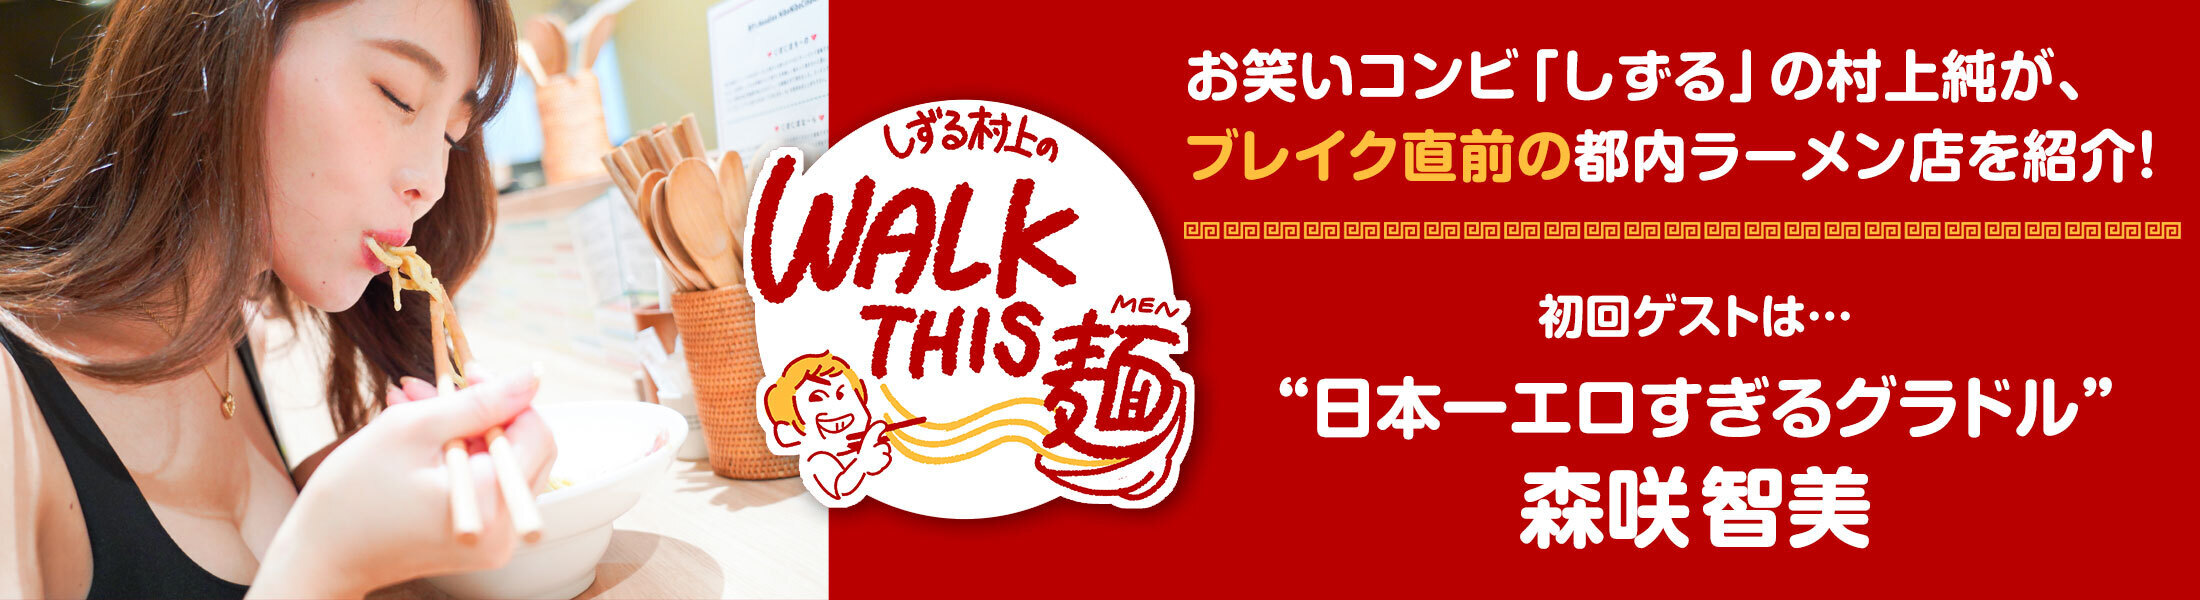 walk this 麺